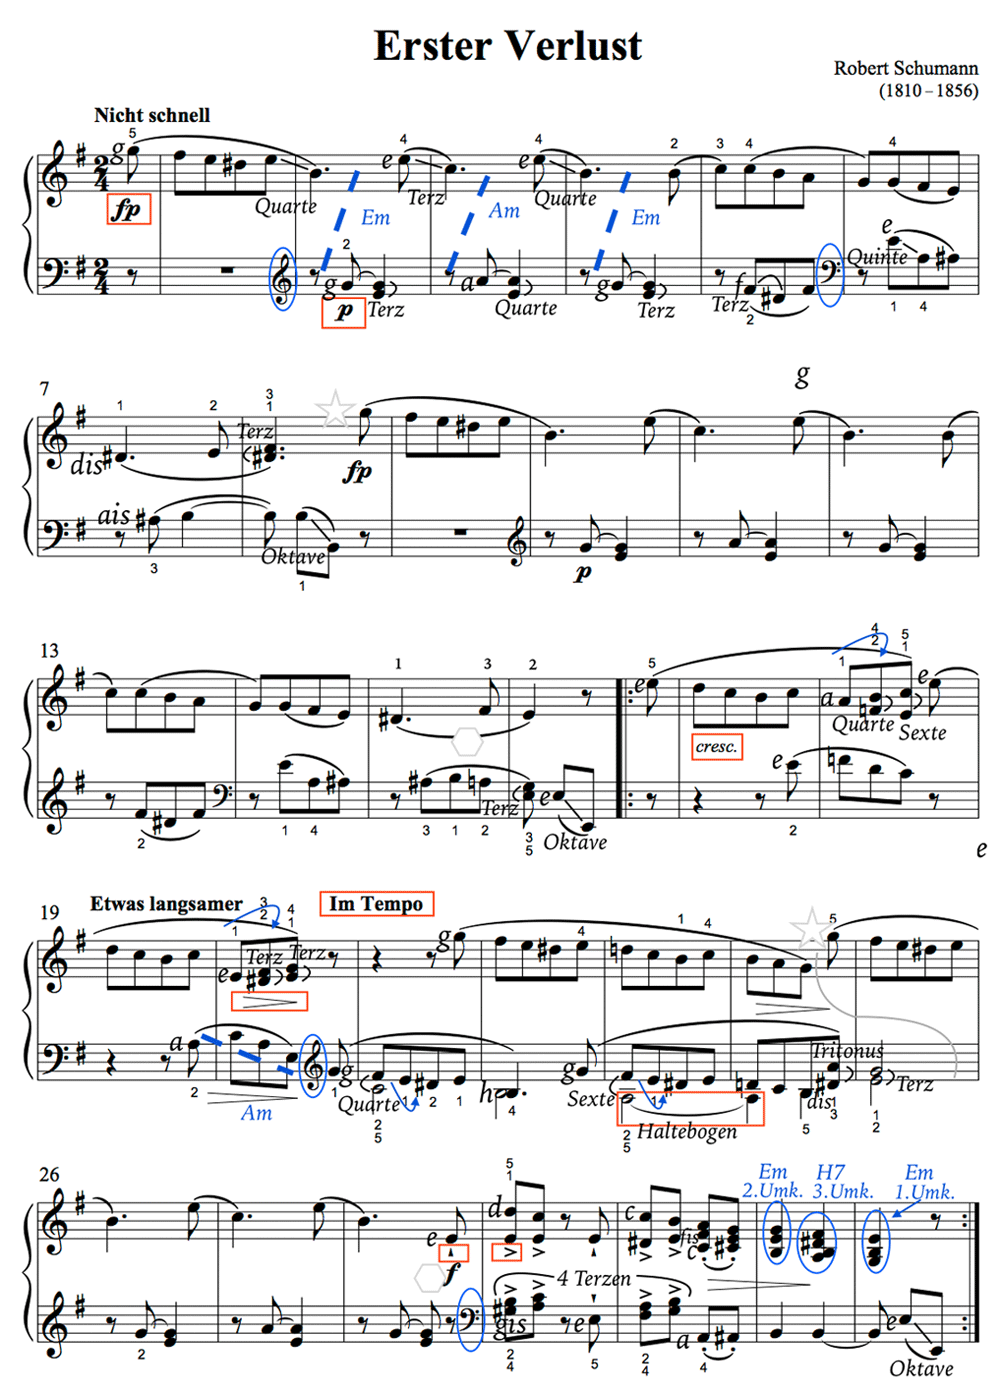 Noten mit Lesehilfe - Robert Schumann: Erster Verlust